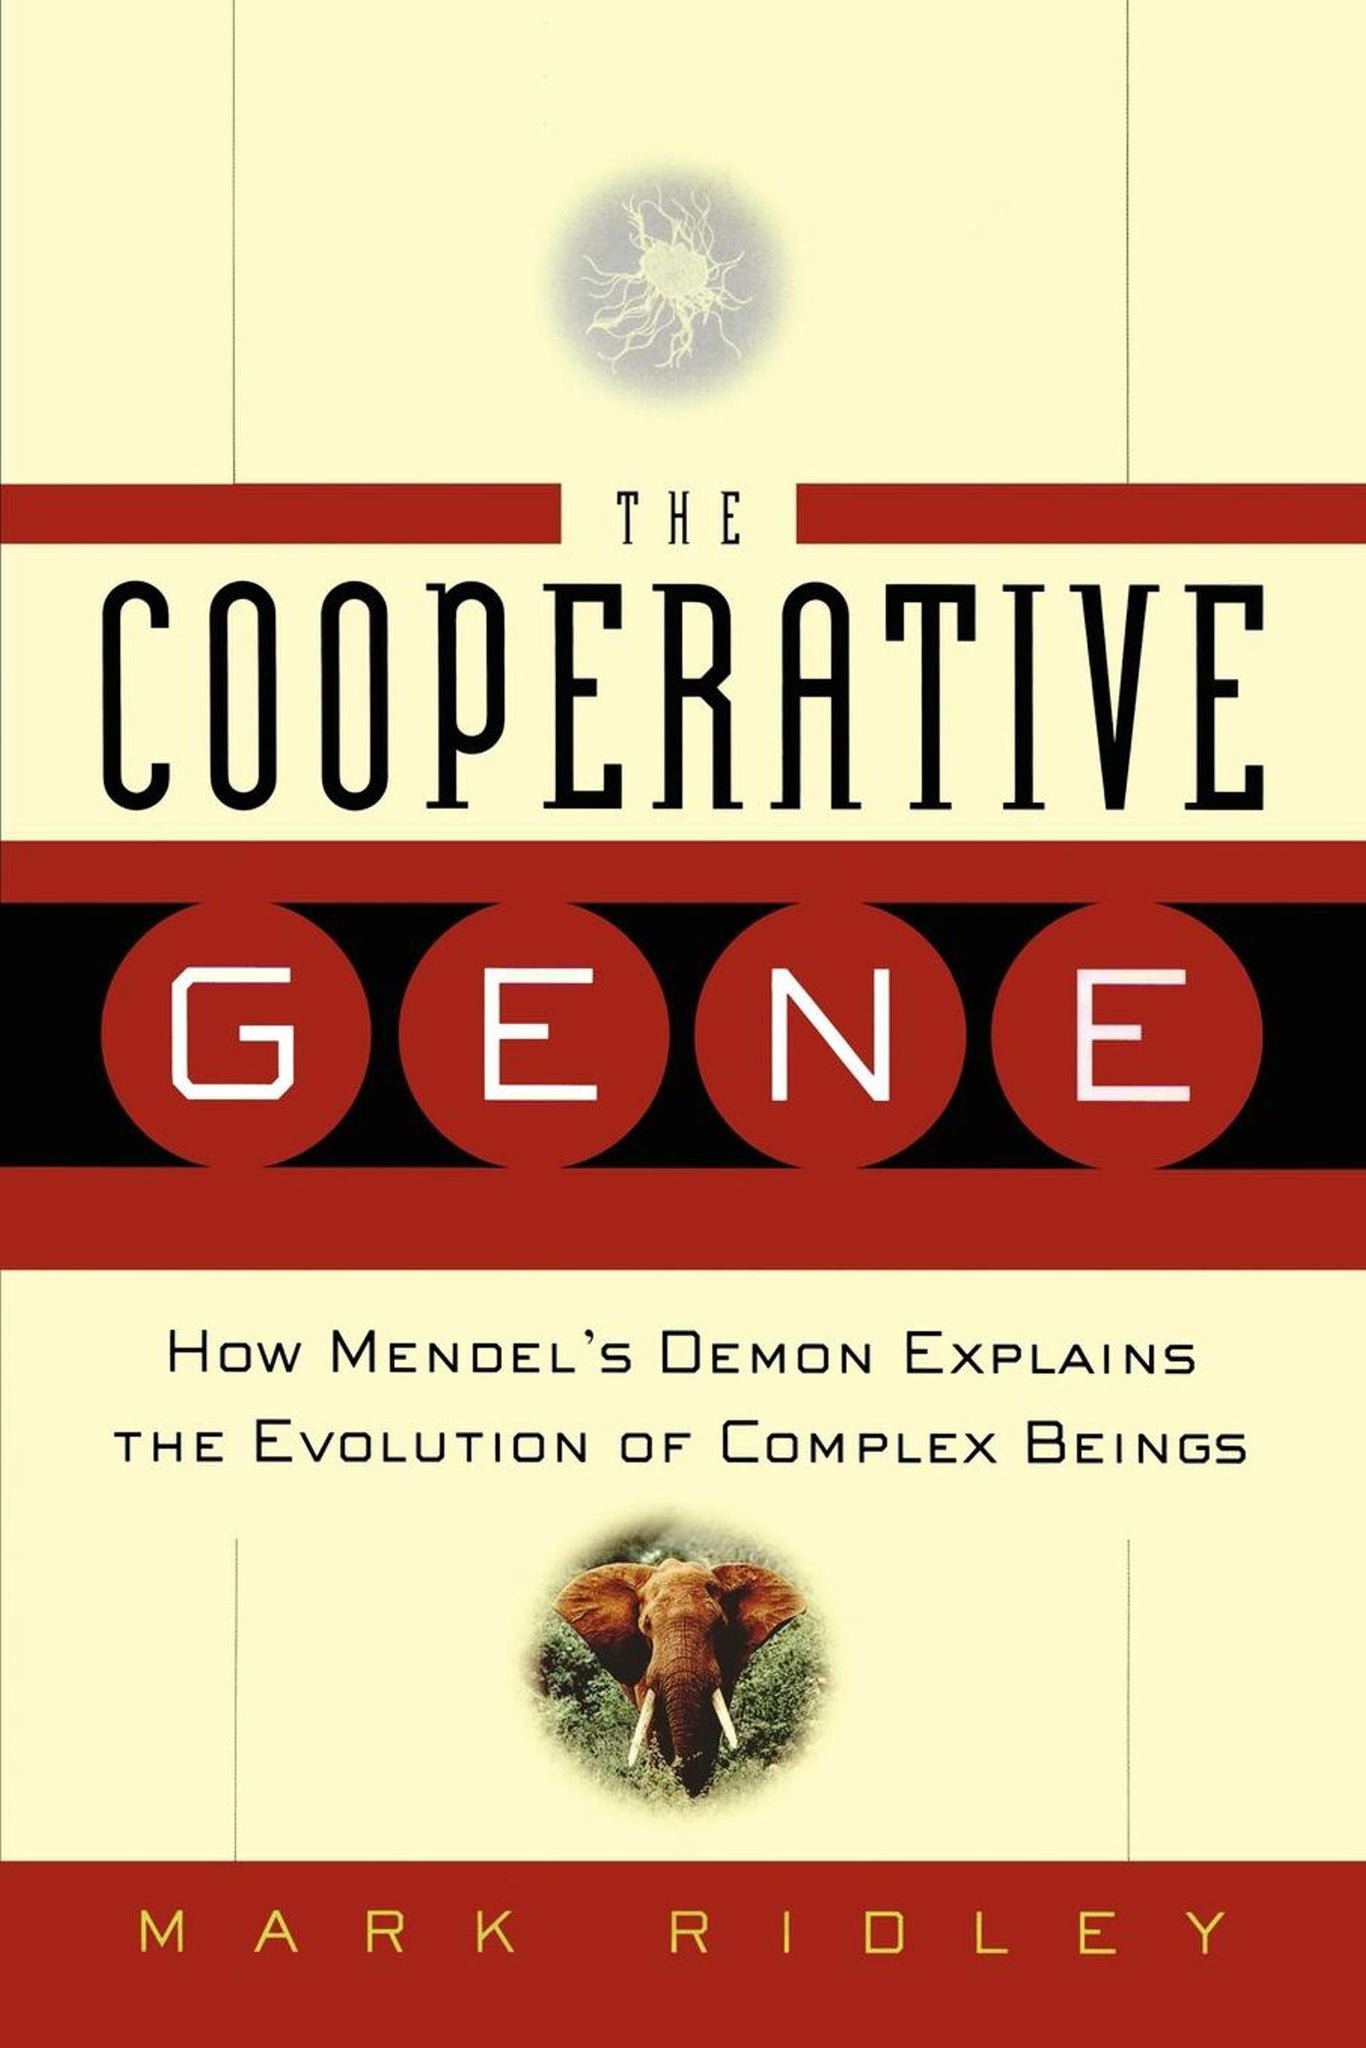 Cooperative Gene